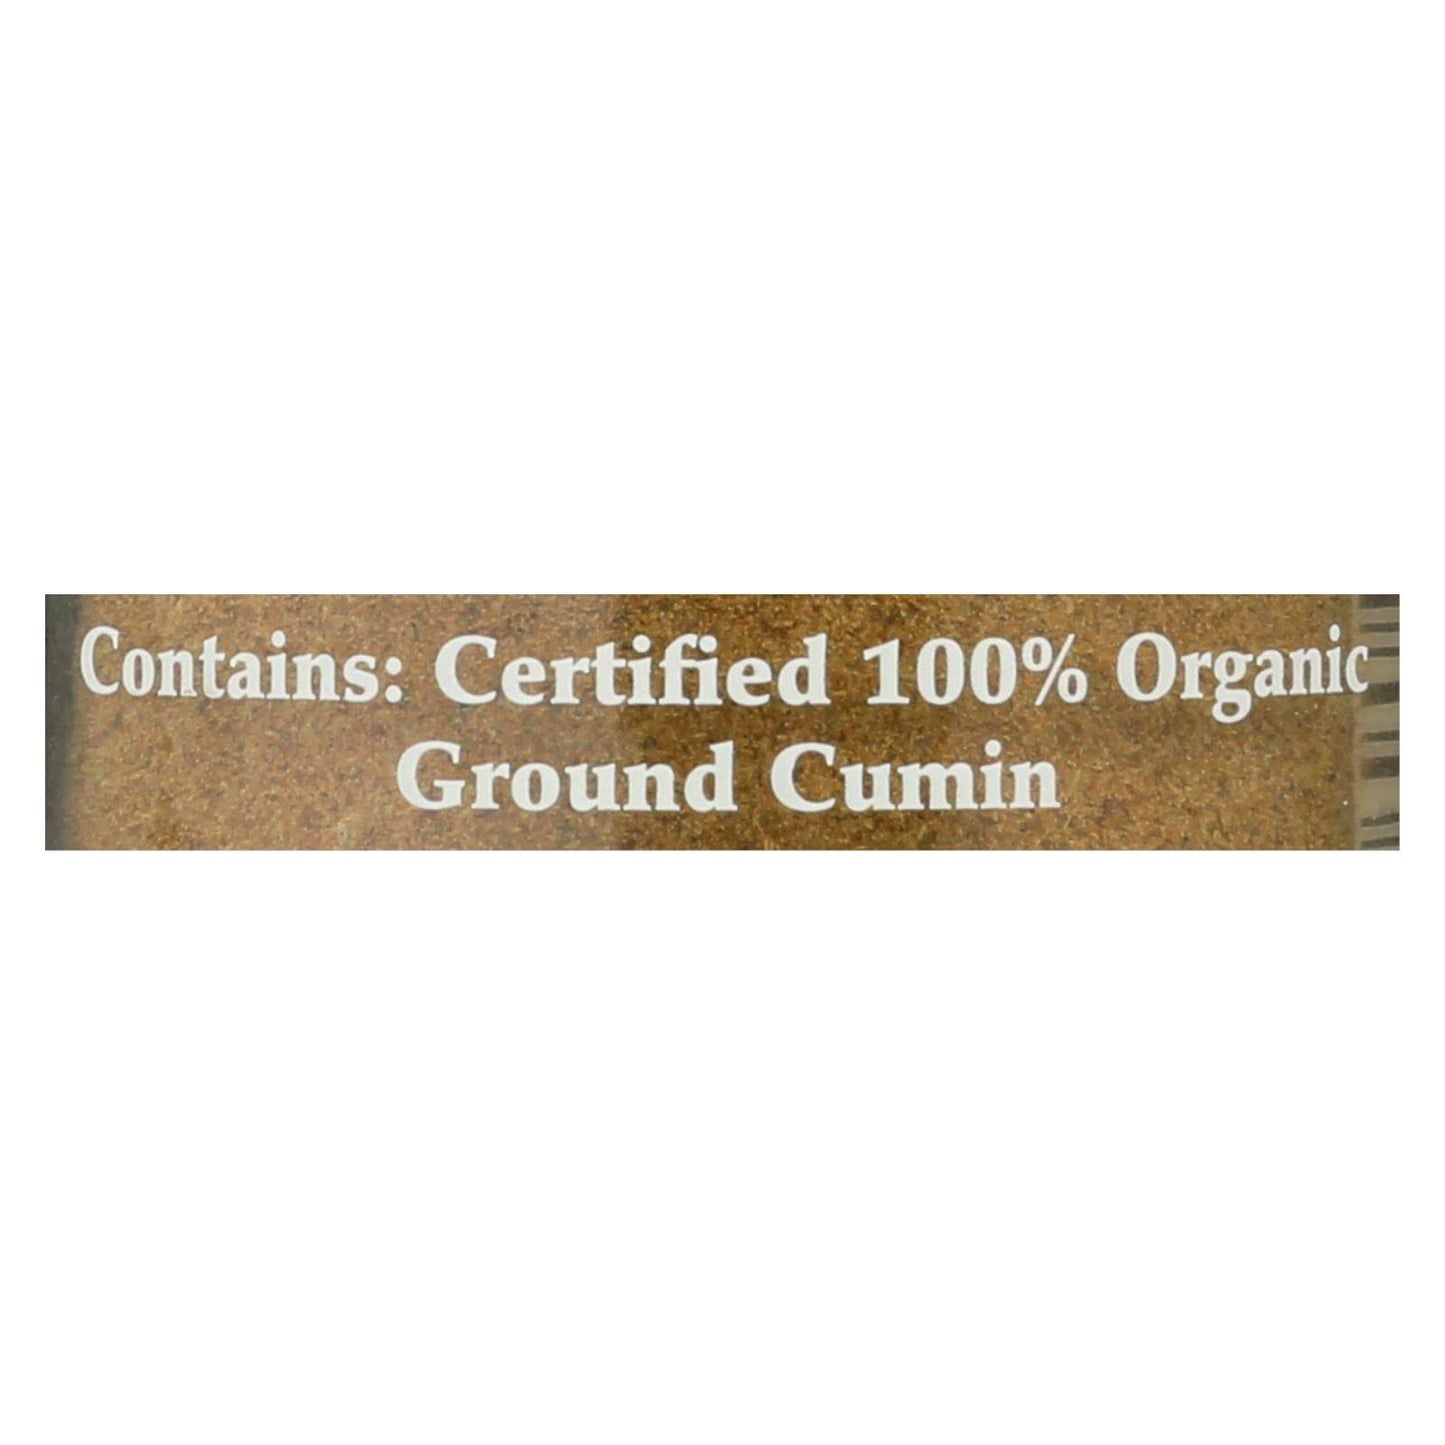 Morton And Bassett Organic Ground Cumin - Cumin - Case Of 3 - 2 Oz. | OnlyNaturals.us